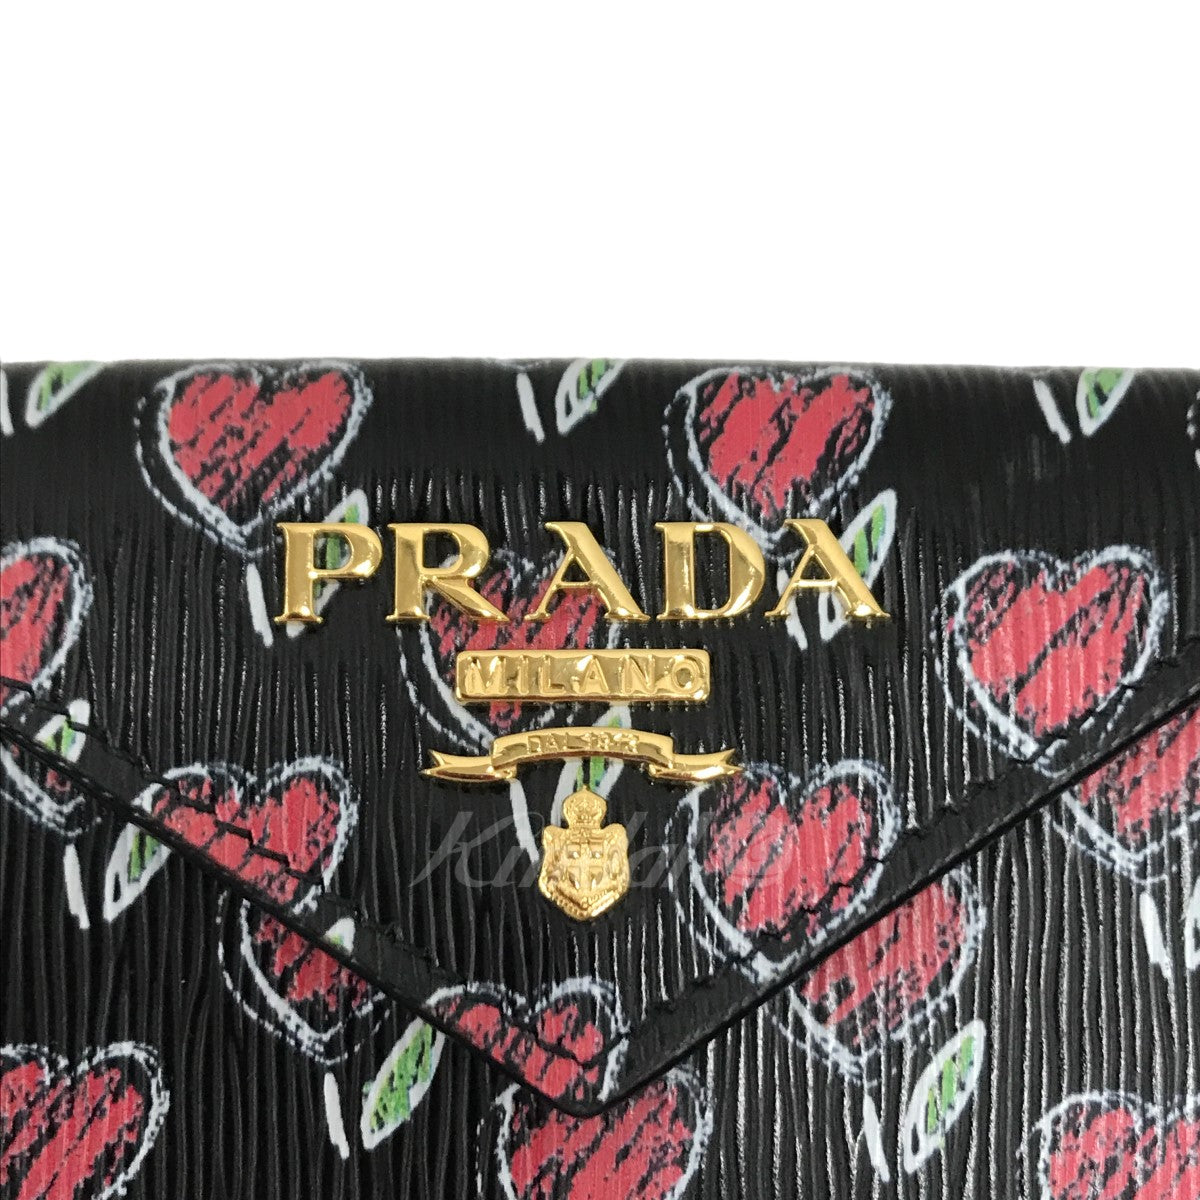 PRADA(プラダ) ロゴ 三つ折り財布 コンパクトウォレット VITELLO MOVE LOVE 1MH021